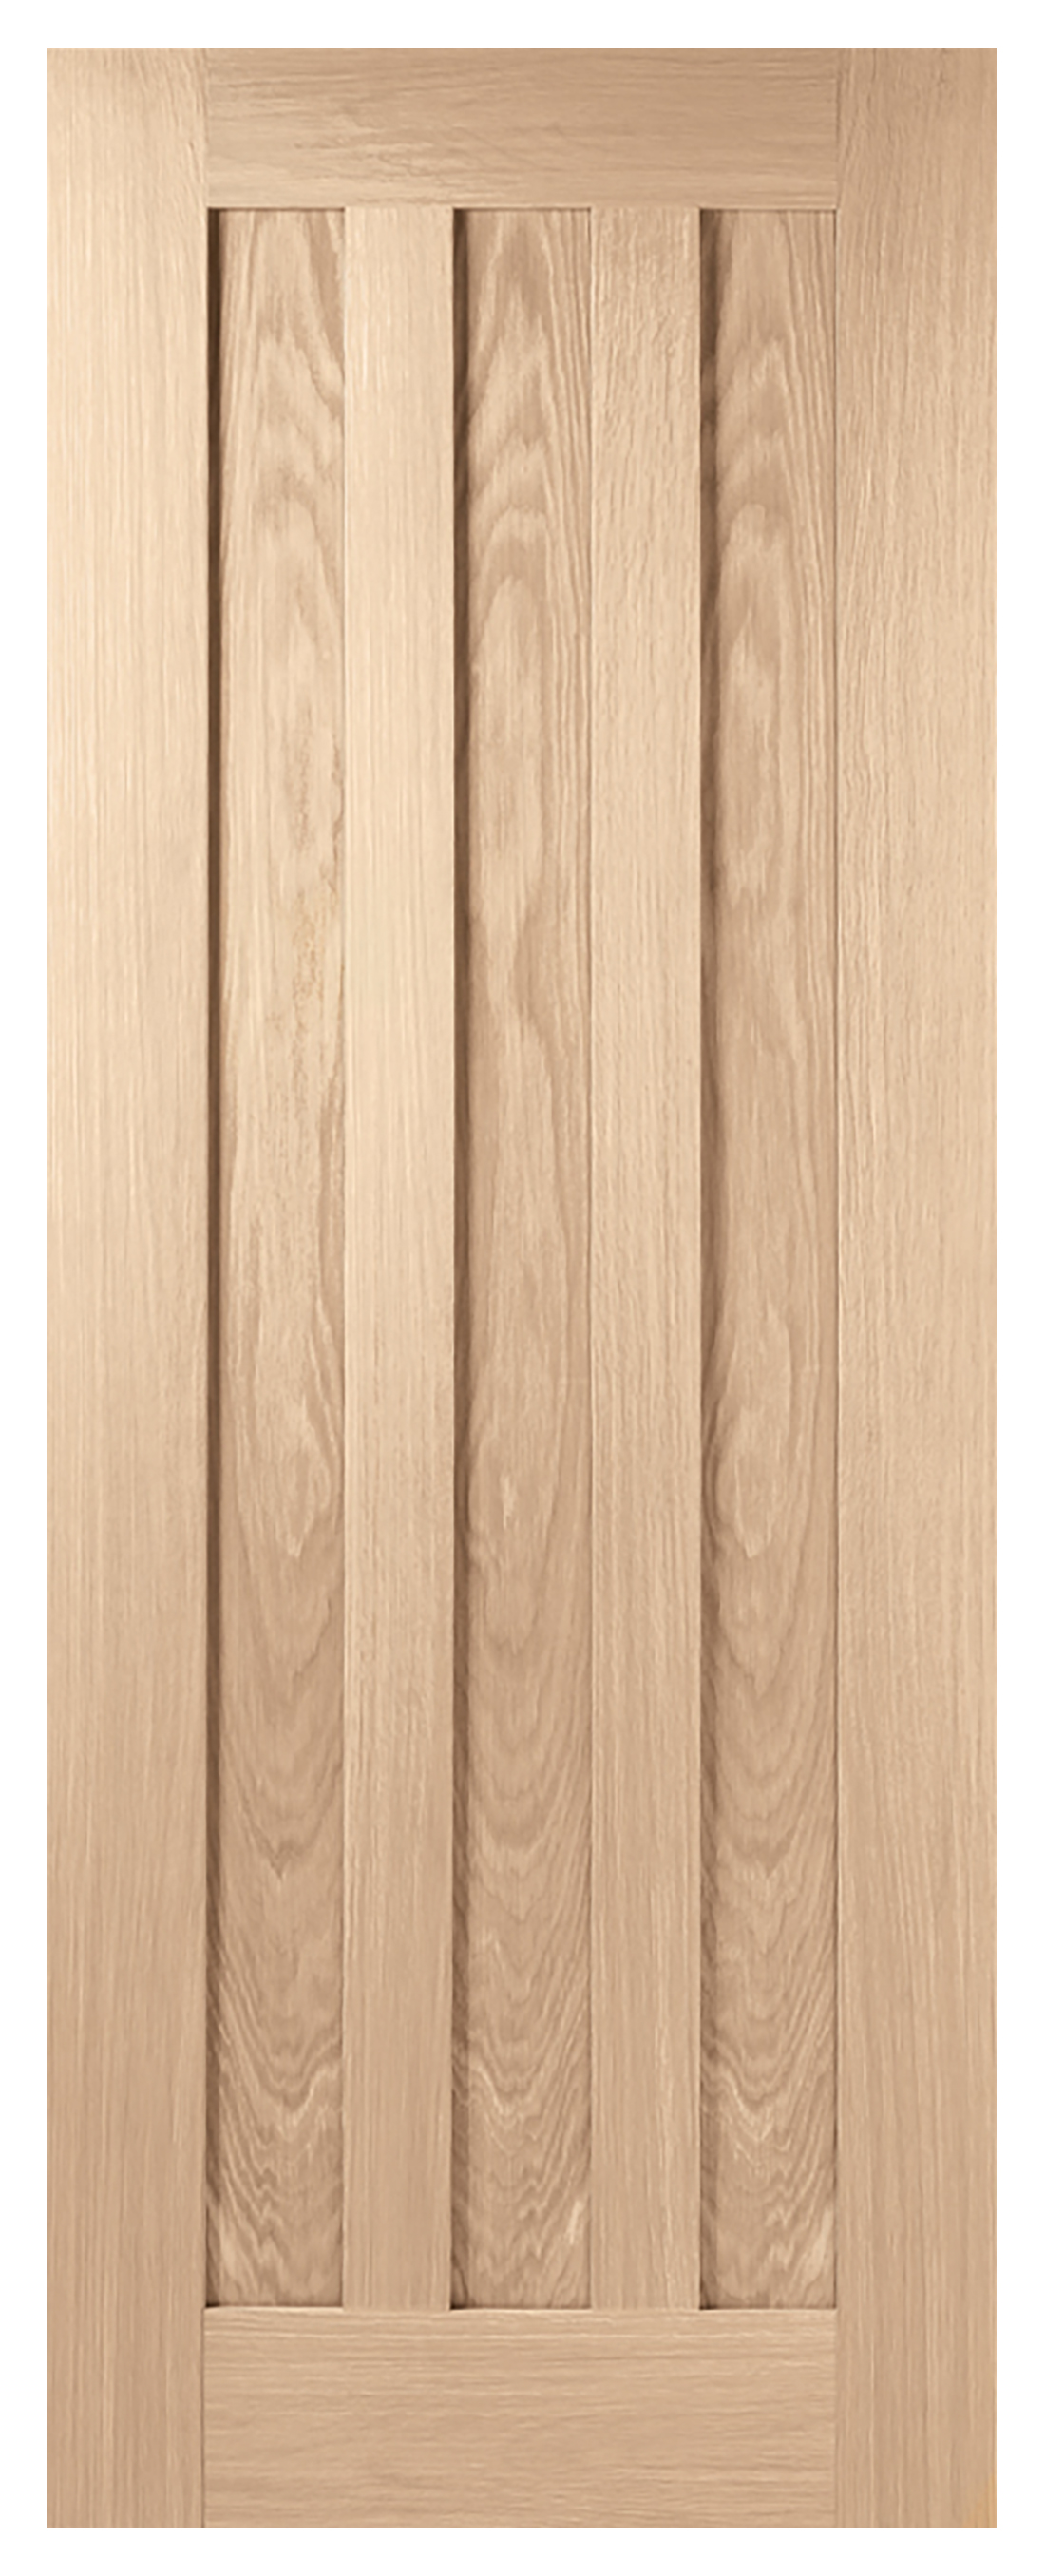 Image of LPD Internal Idaho 3 Panel Unfinished Oak Solid Core Door - 826 x 2040mm